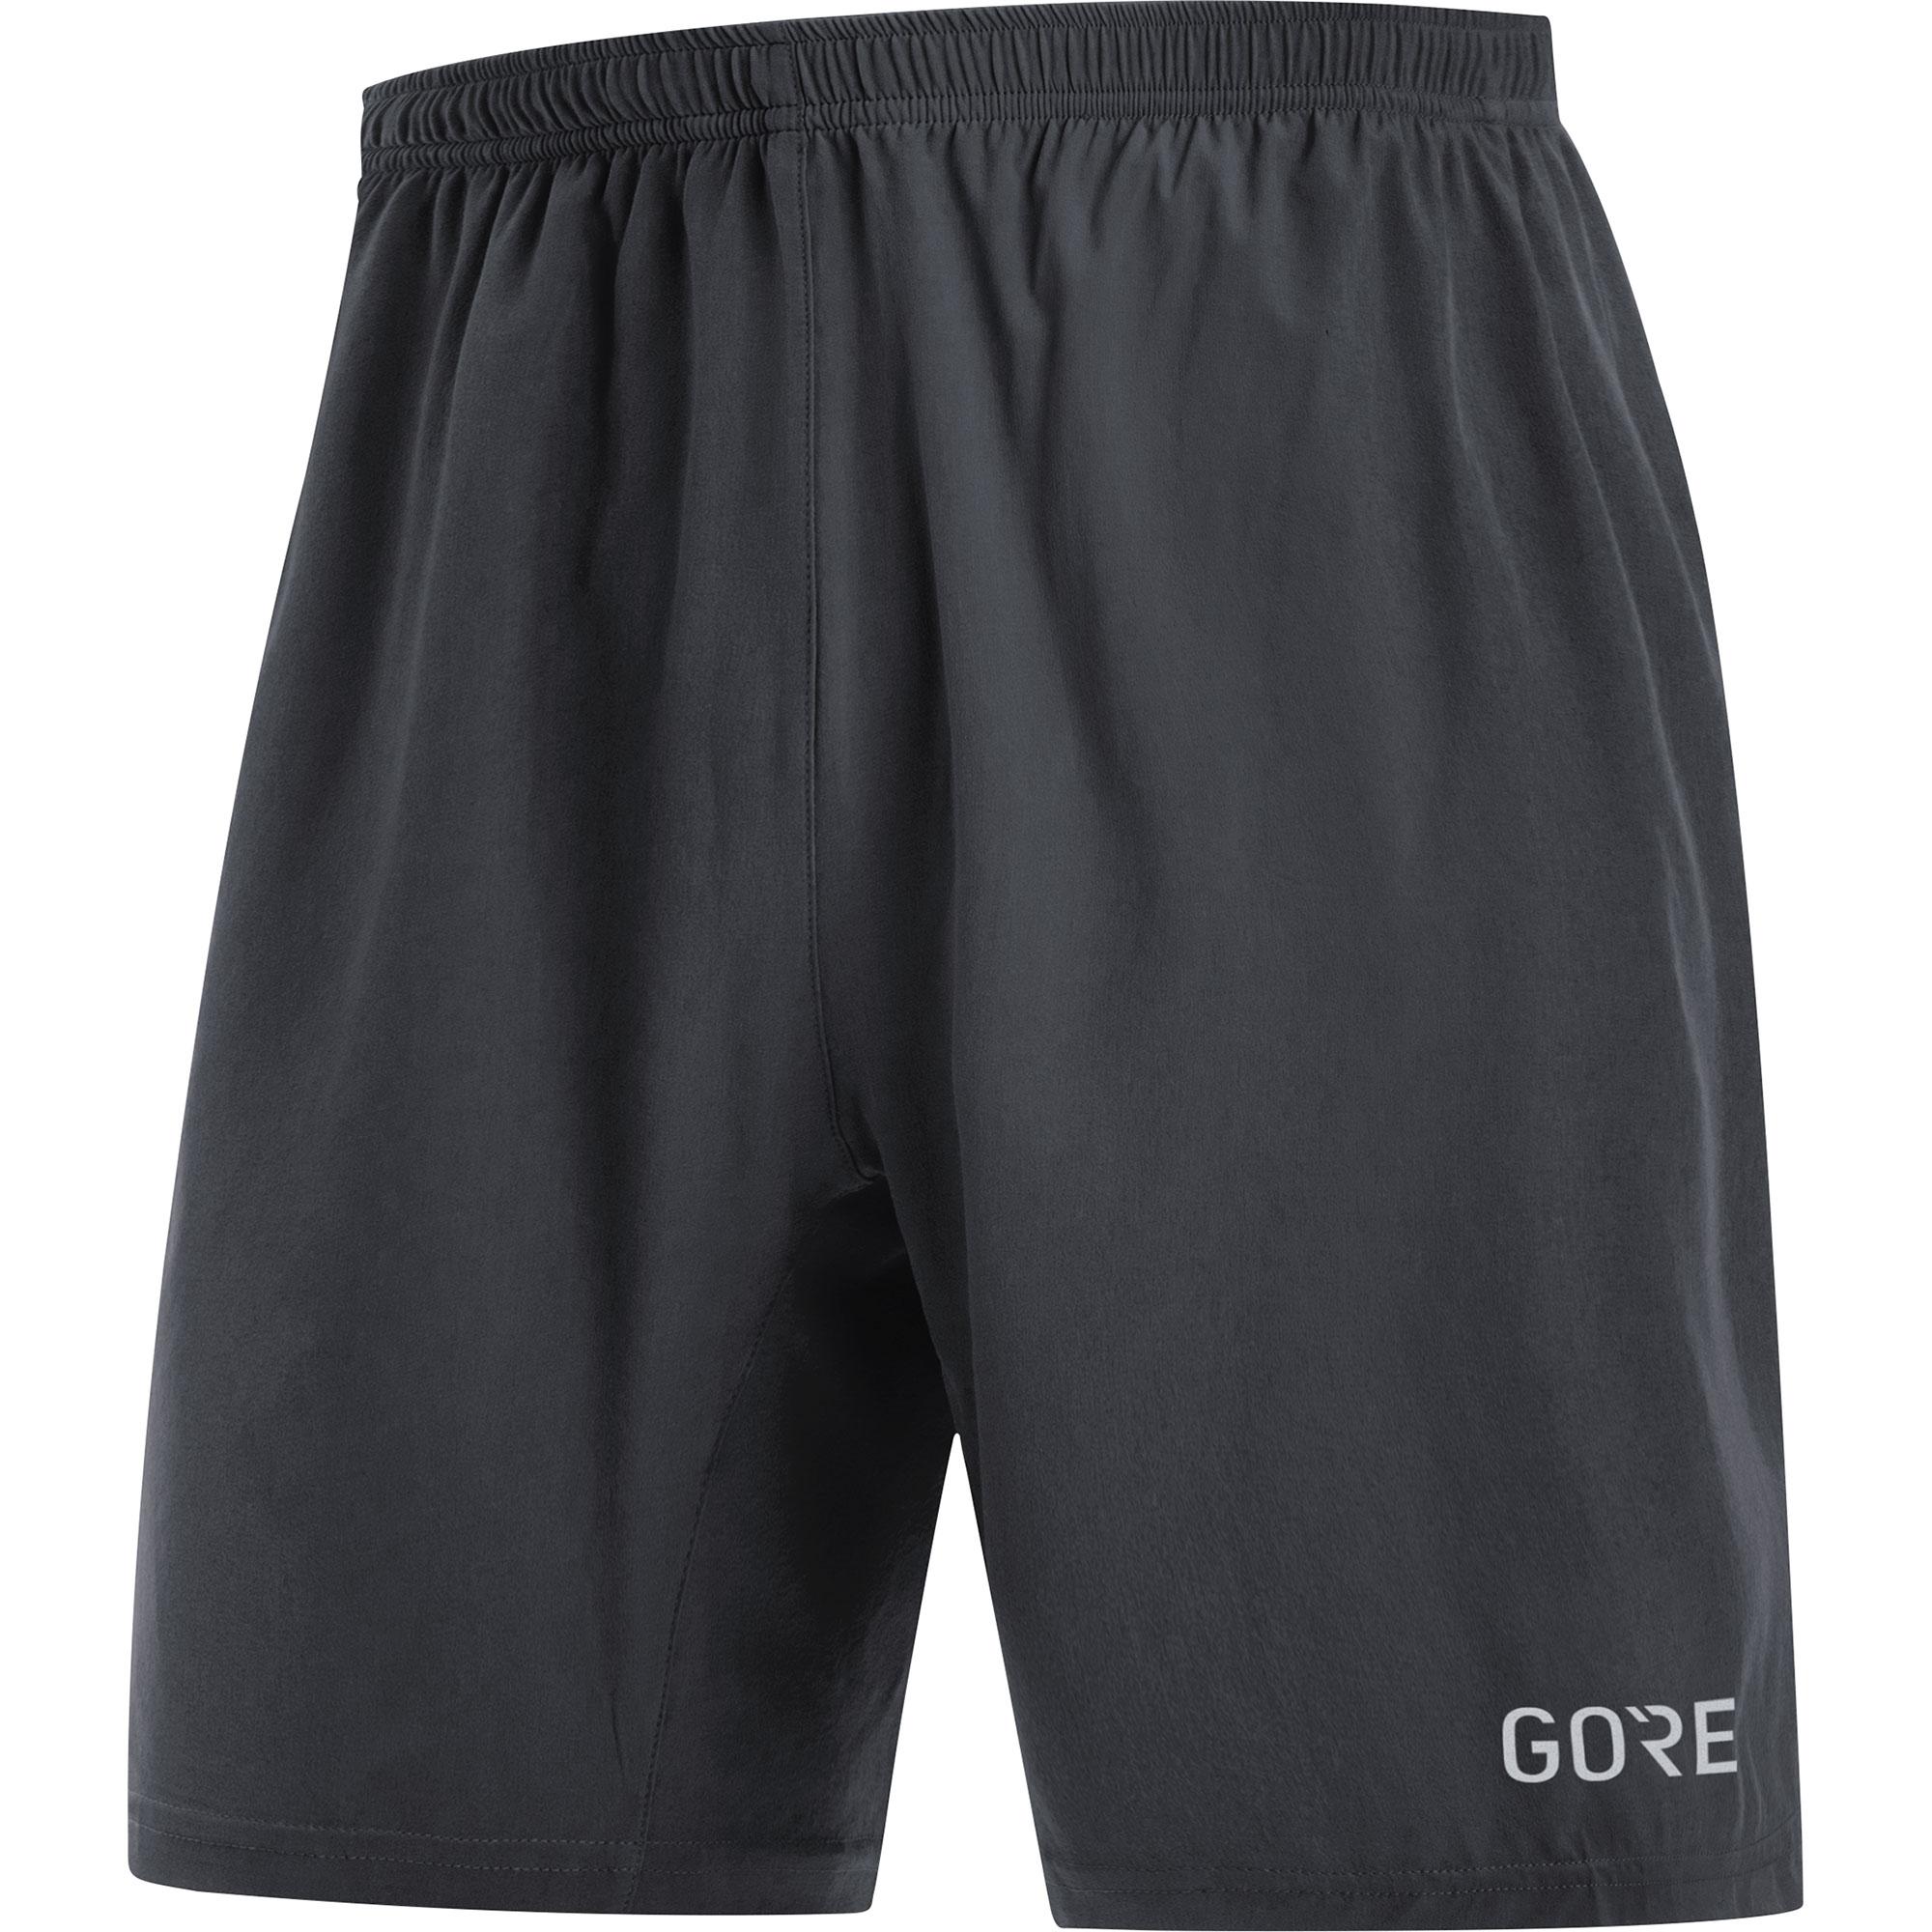 Gorewear R5 5 Inch Shorts - Black